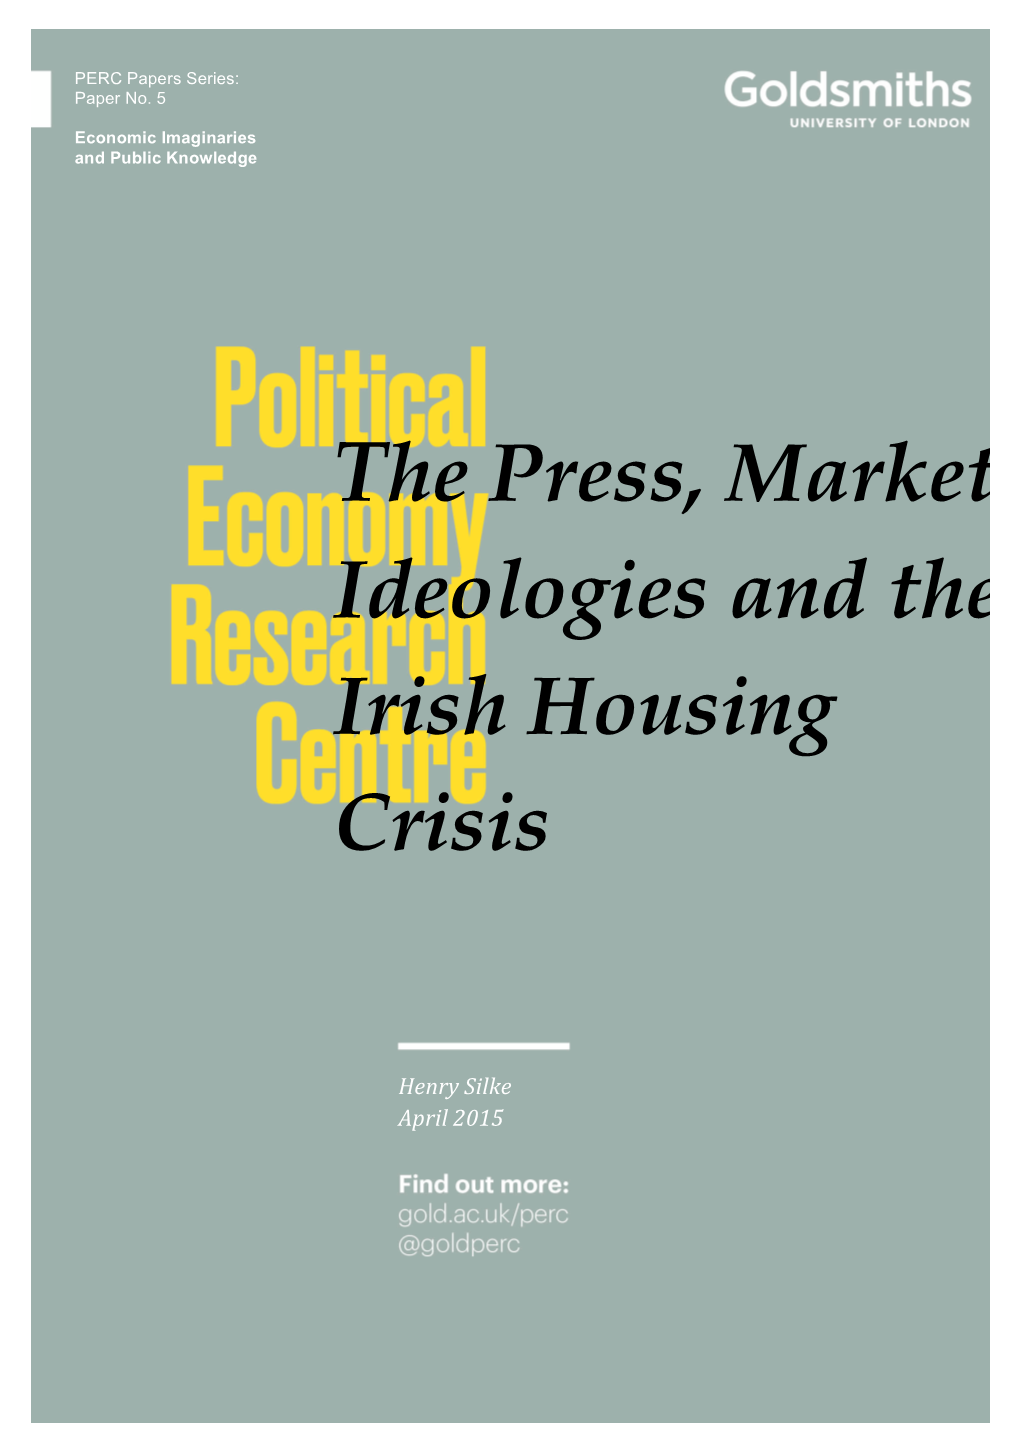 Ideologies and the Irish Housing Crisis